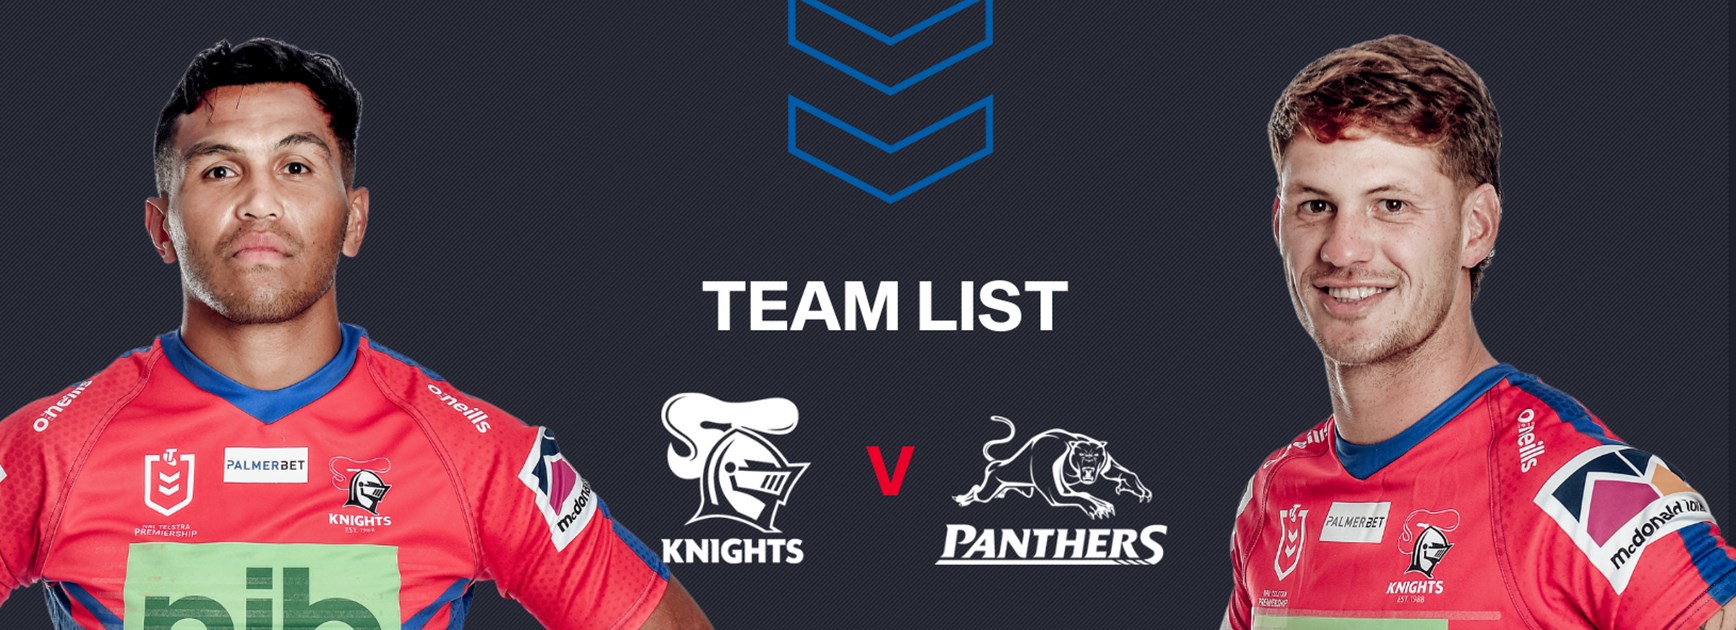 Panthers v Knights Round 3 NRL team list